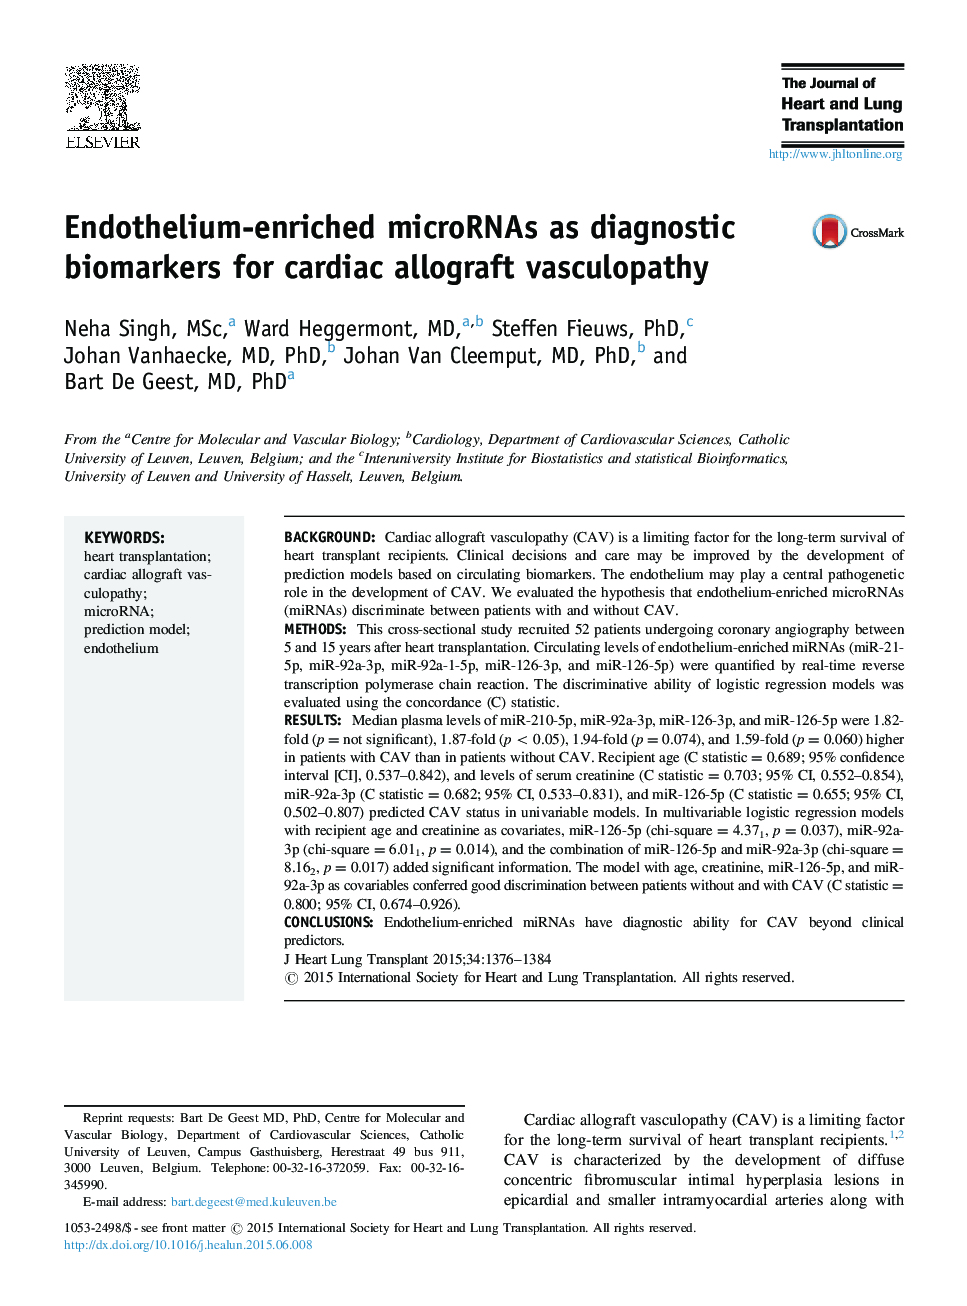 Endothelium-enriched microRNAs as diagnostic biomarkers for cardiac allograft vasculopathy